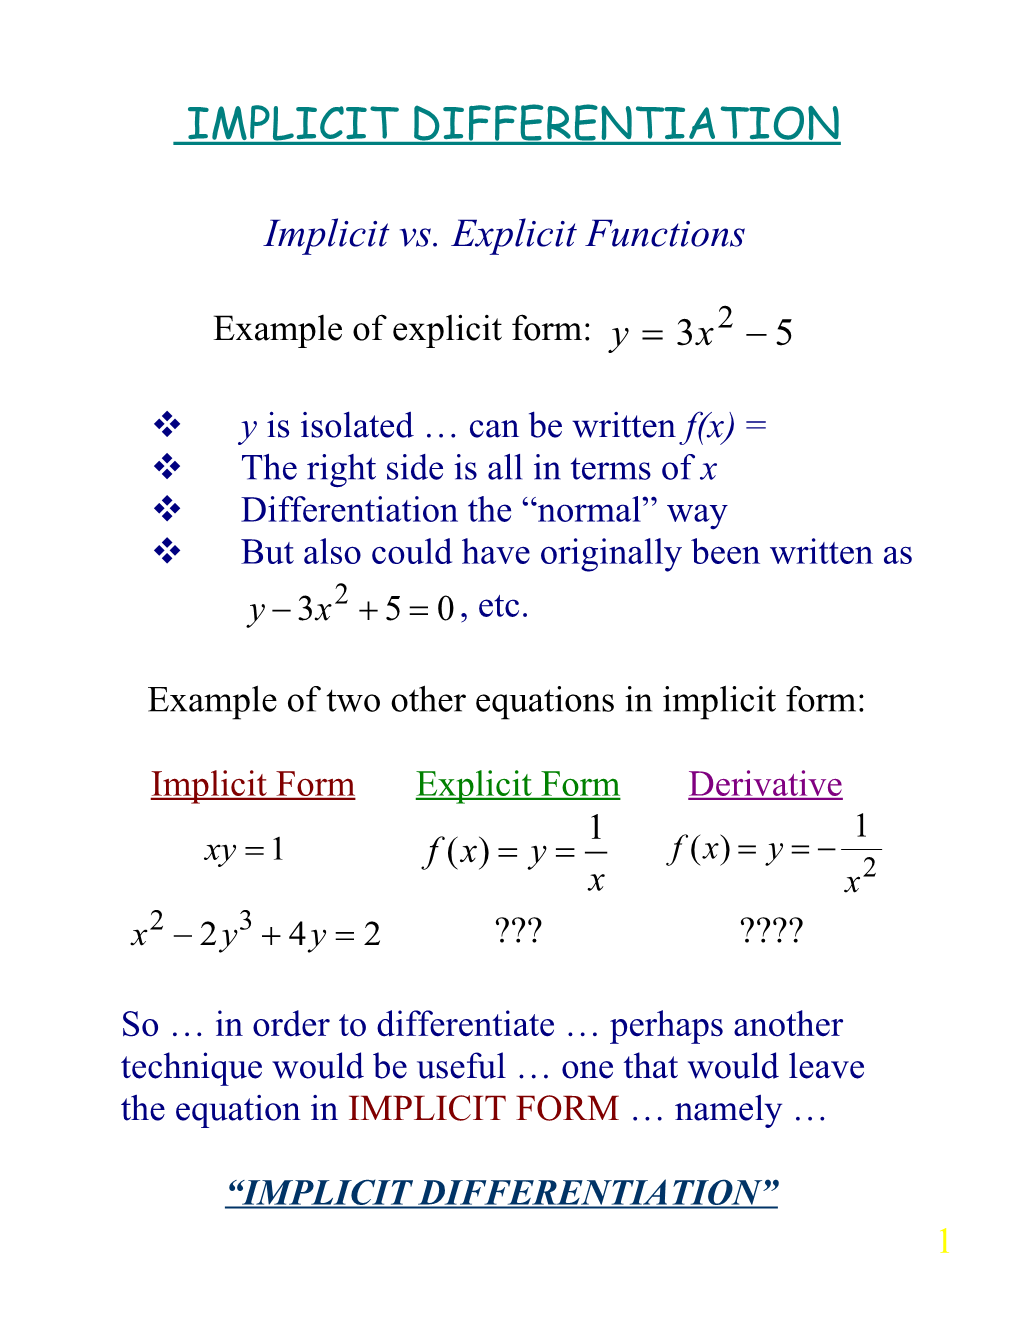 Implicit Vs. Explicit Functions